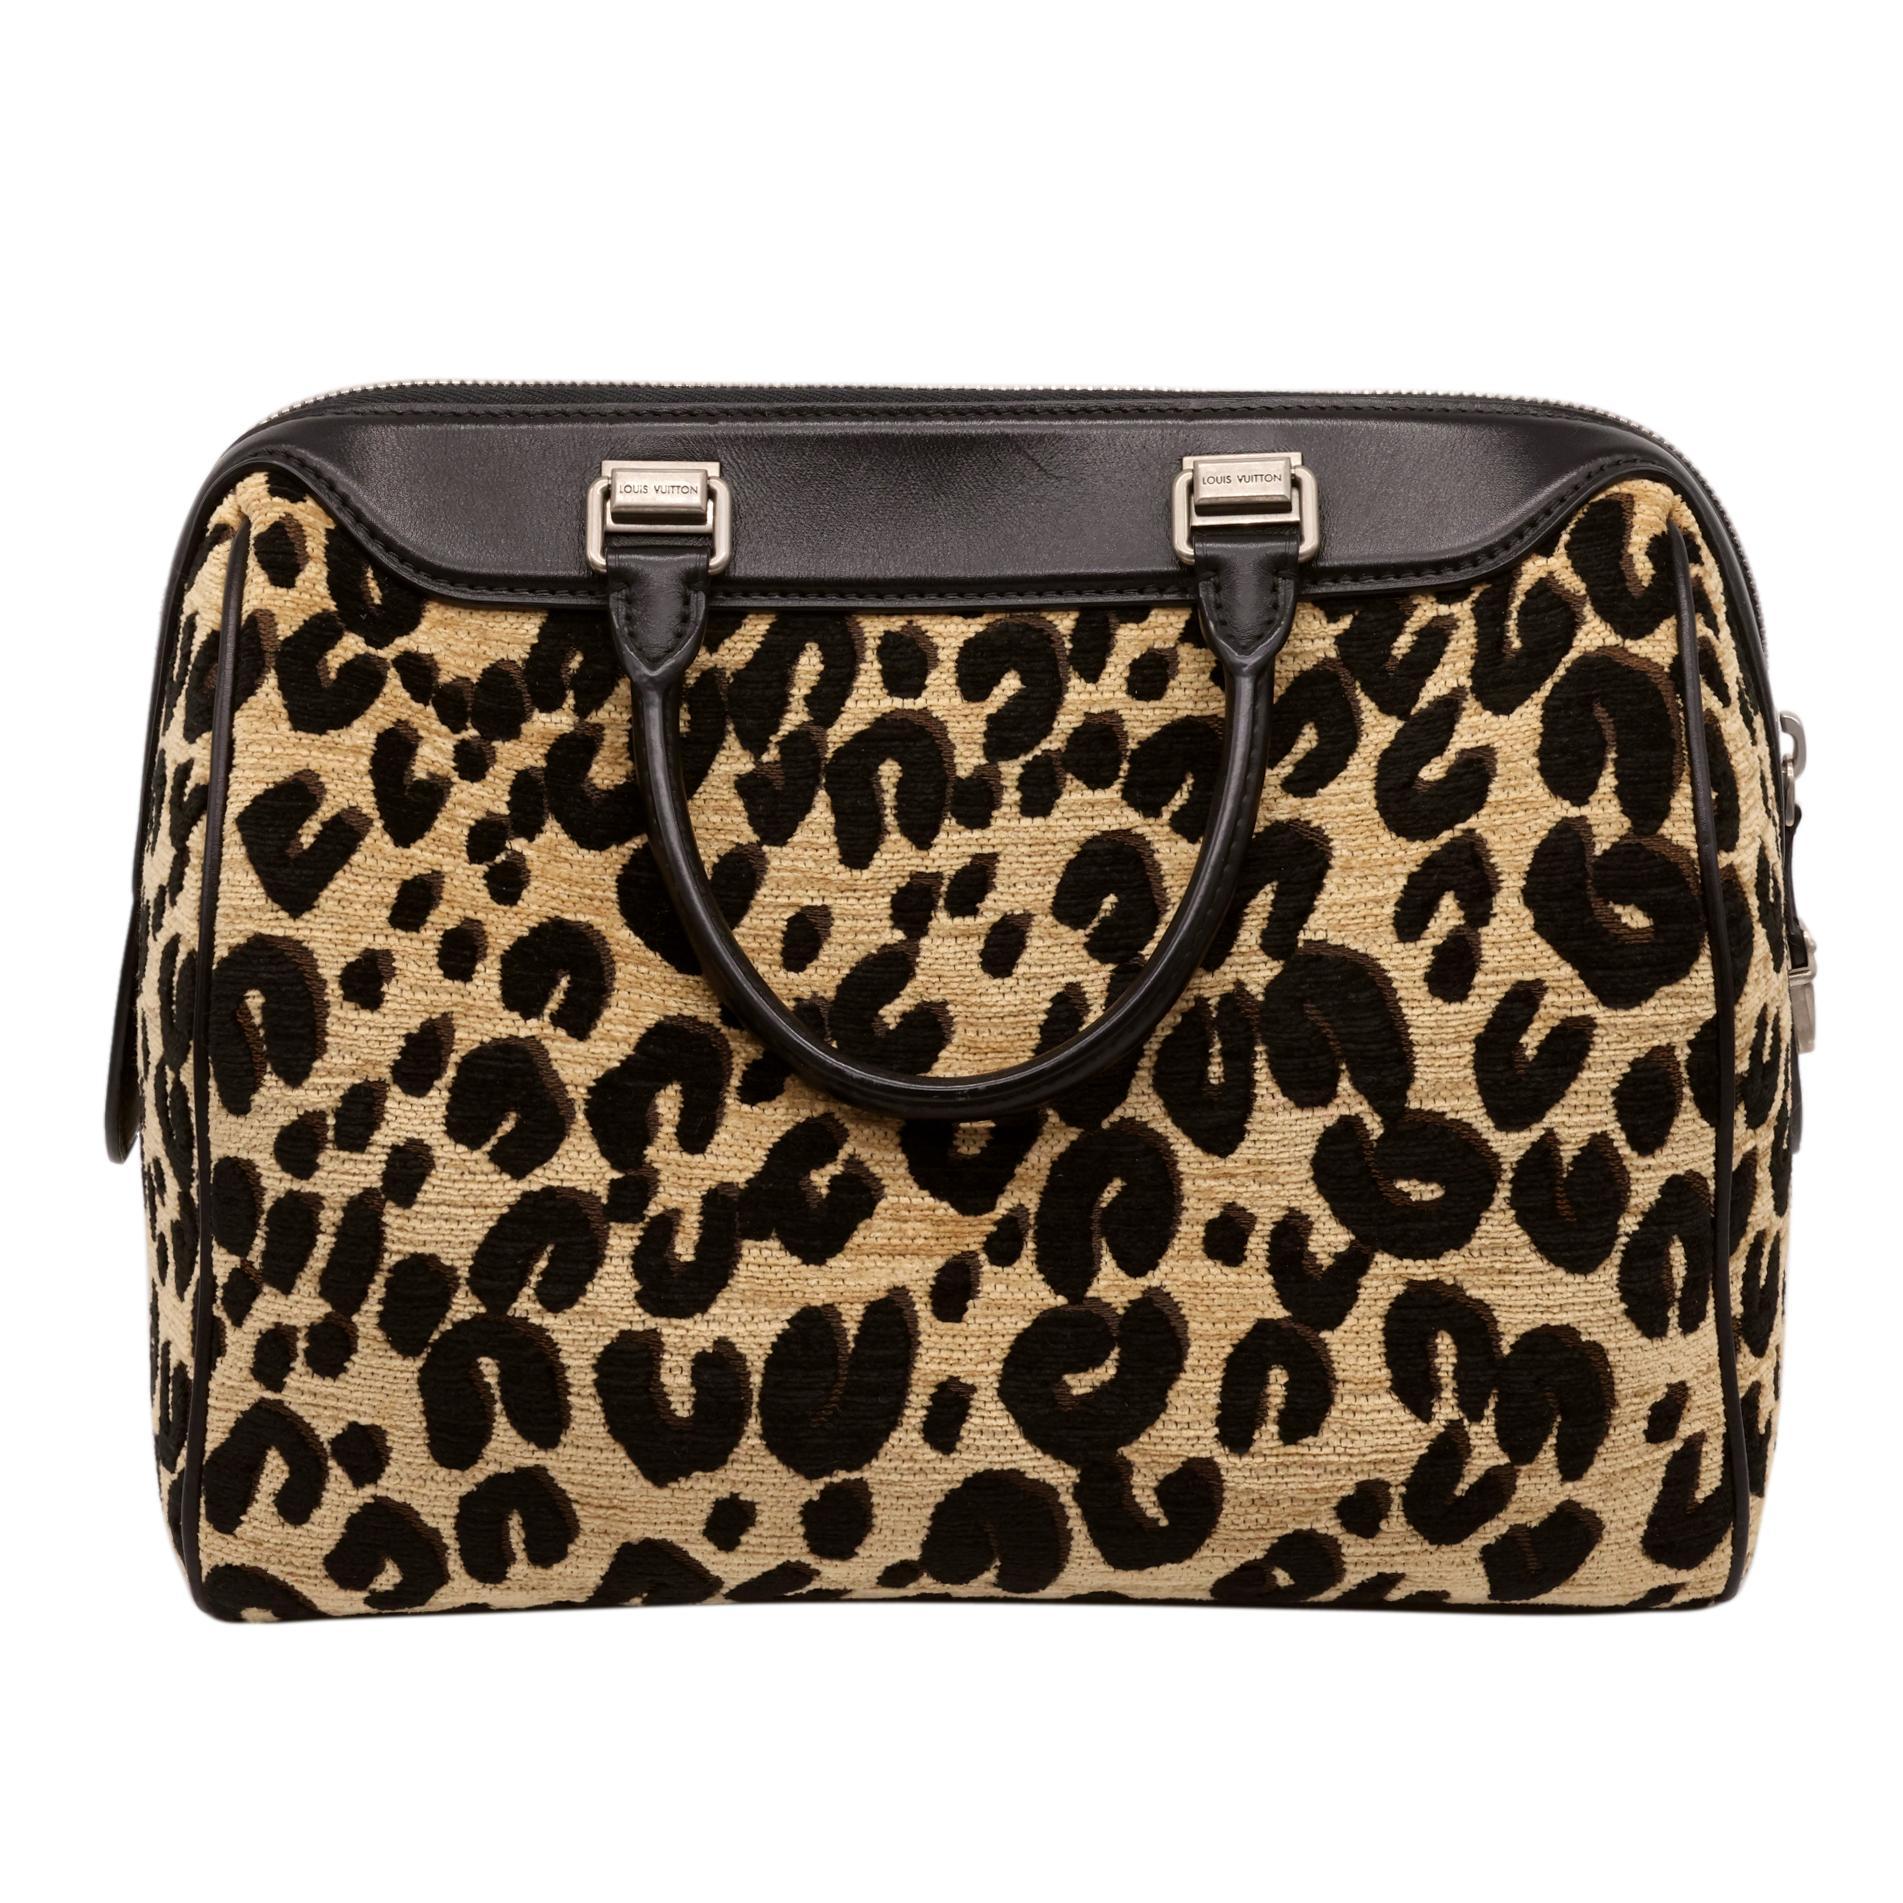 Black Limited Edition Louis Vuitton x Stephen Sprouse Leopard Speedy Bag, 2012.